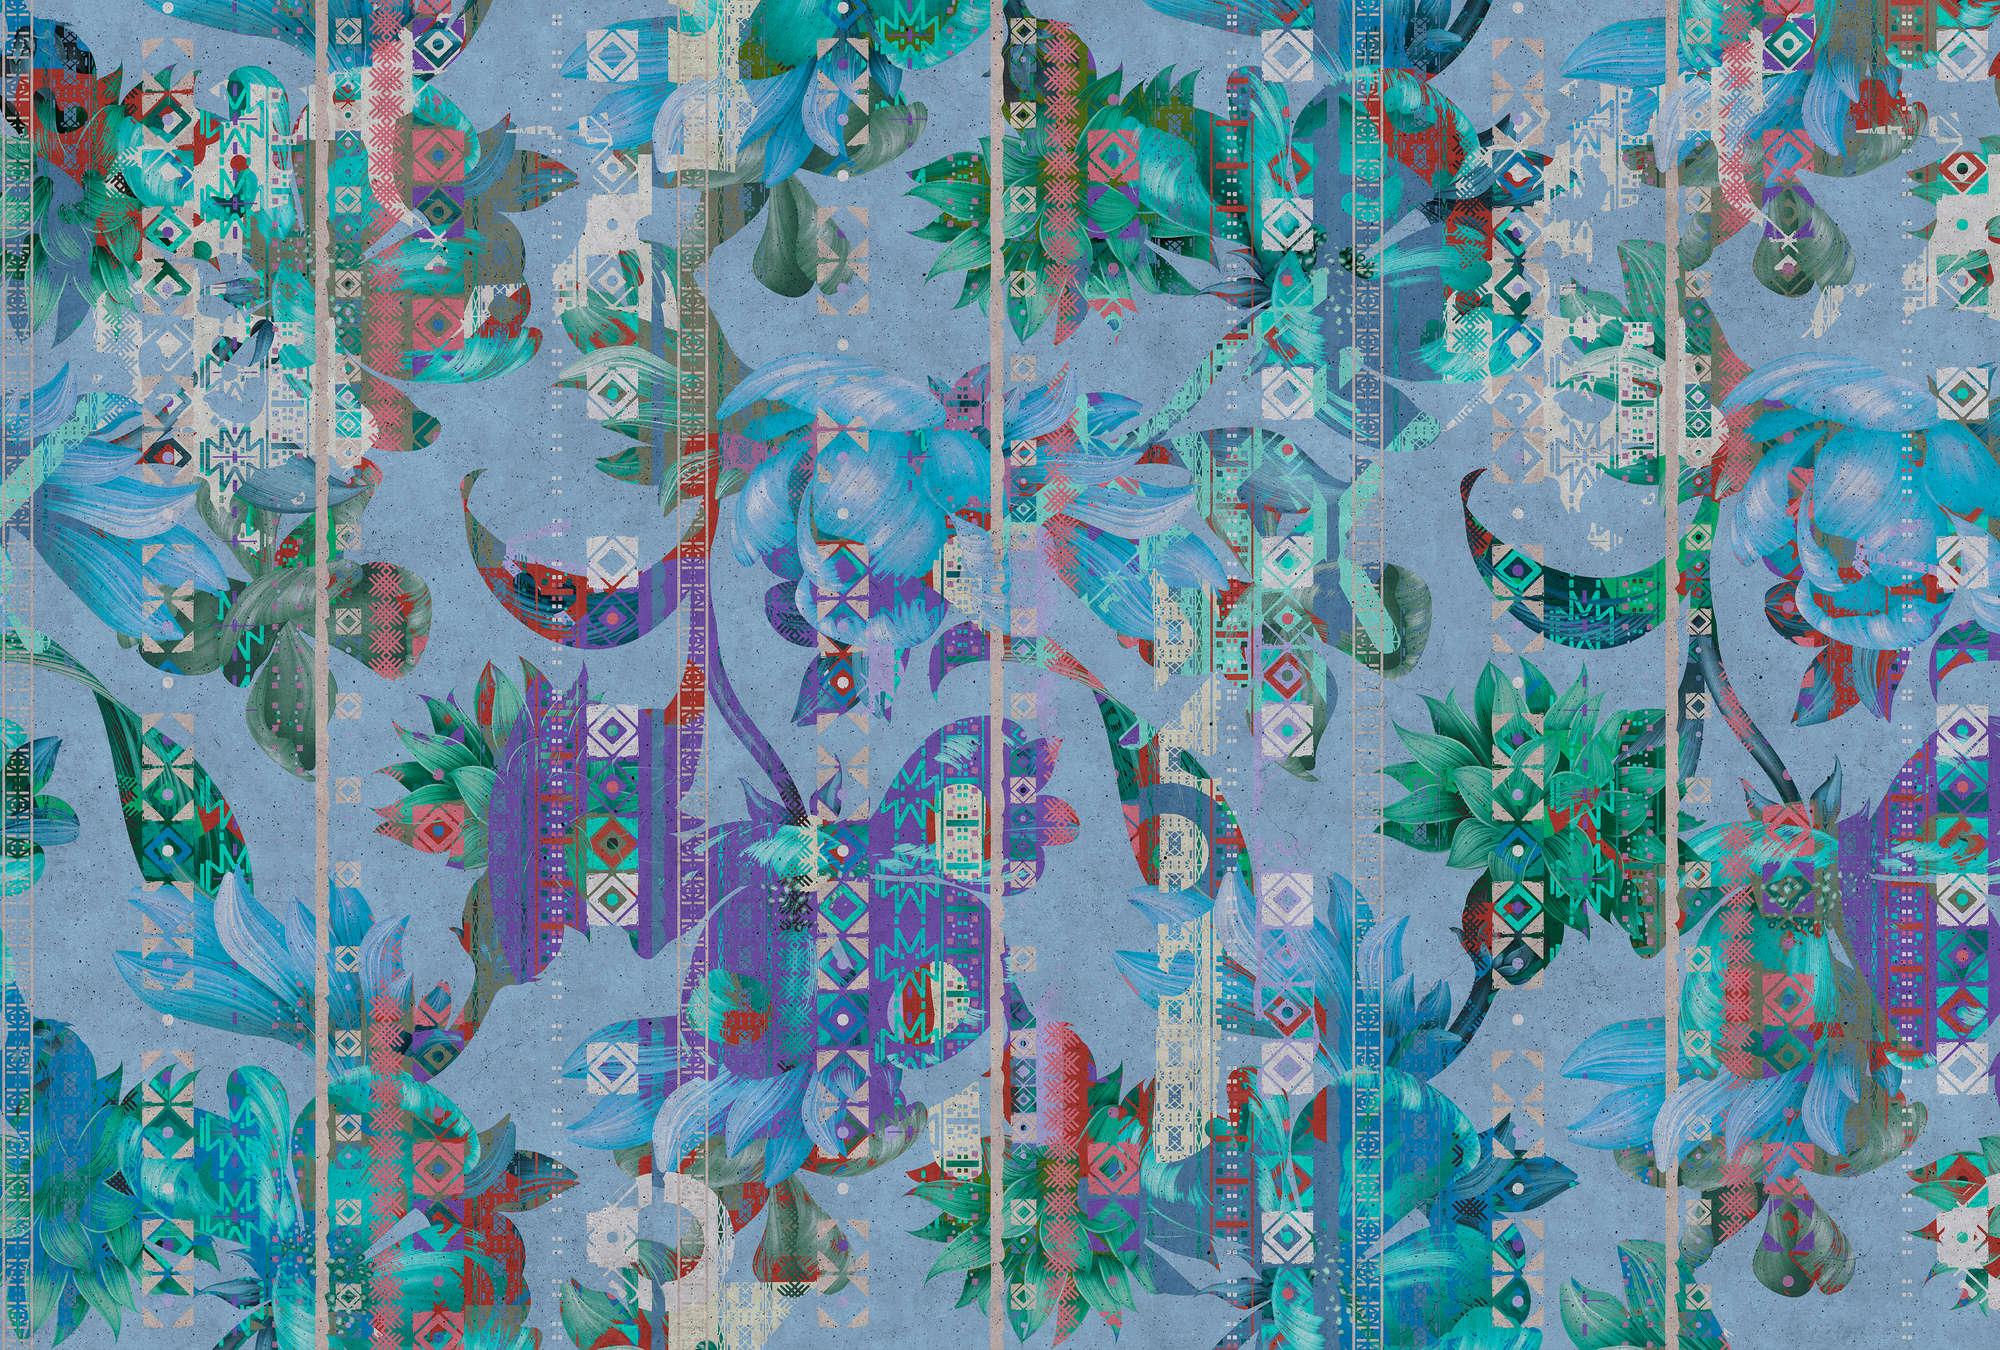             Photo wallpaper birds and plants pattern - Blue, Green
        